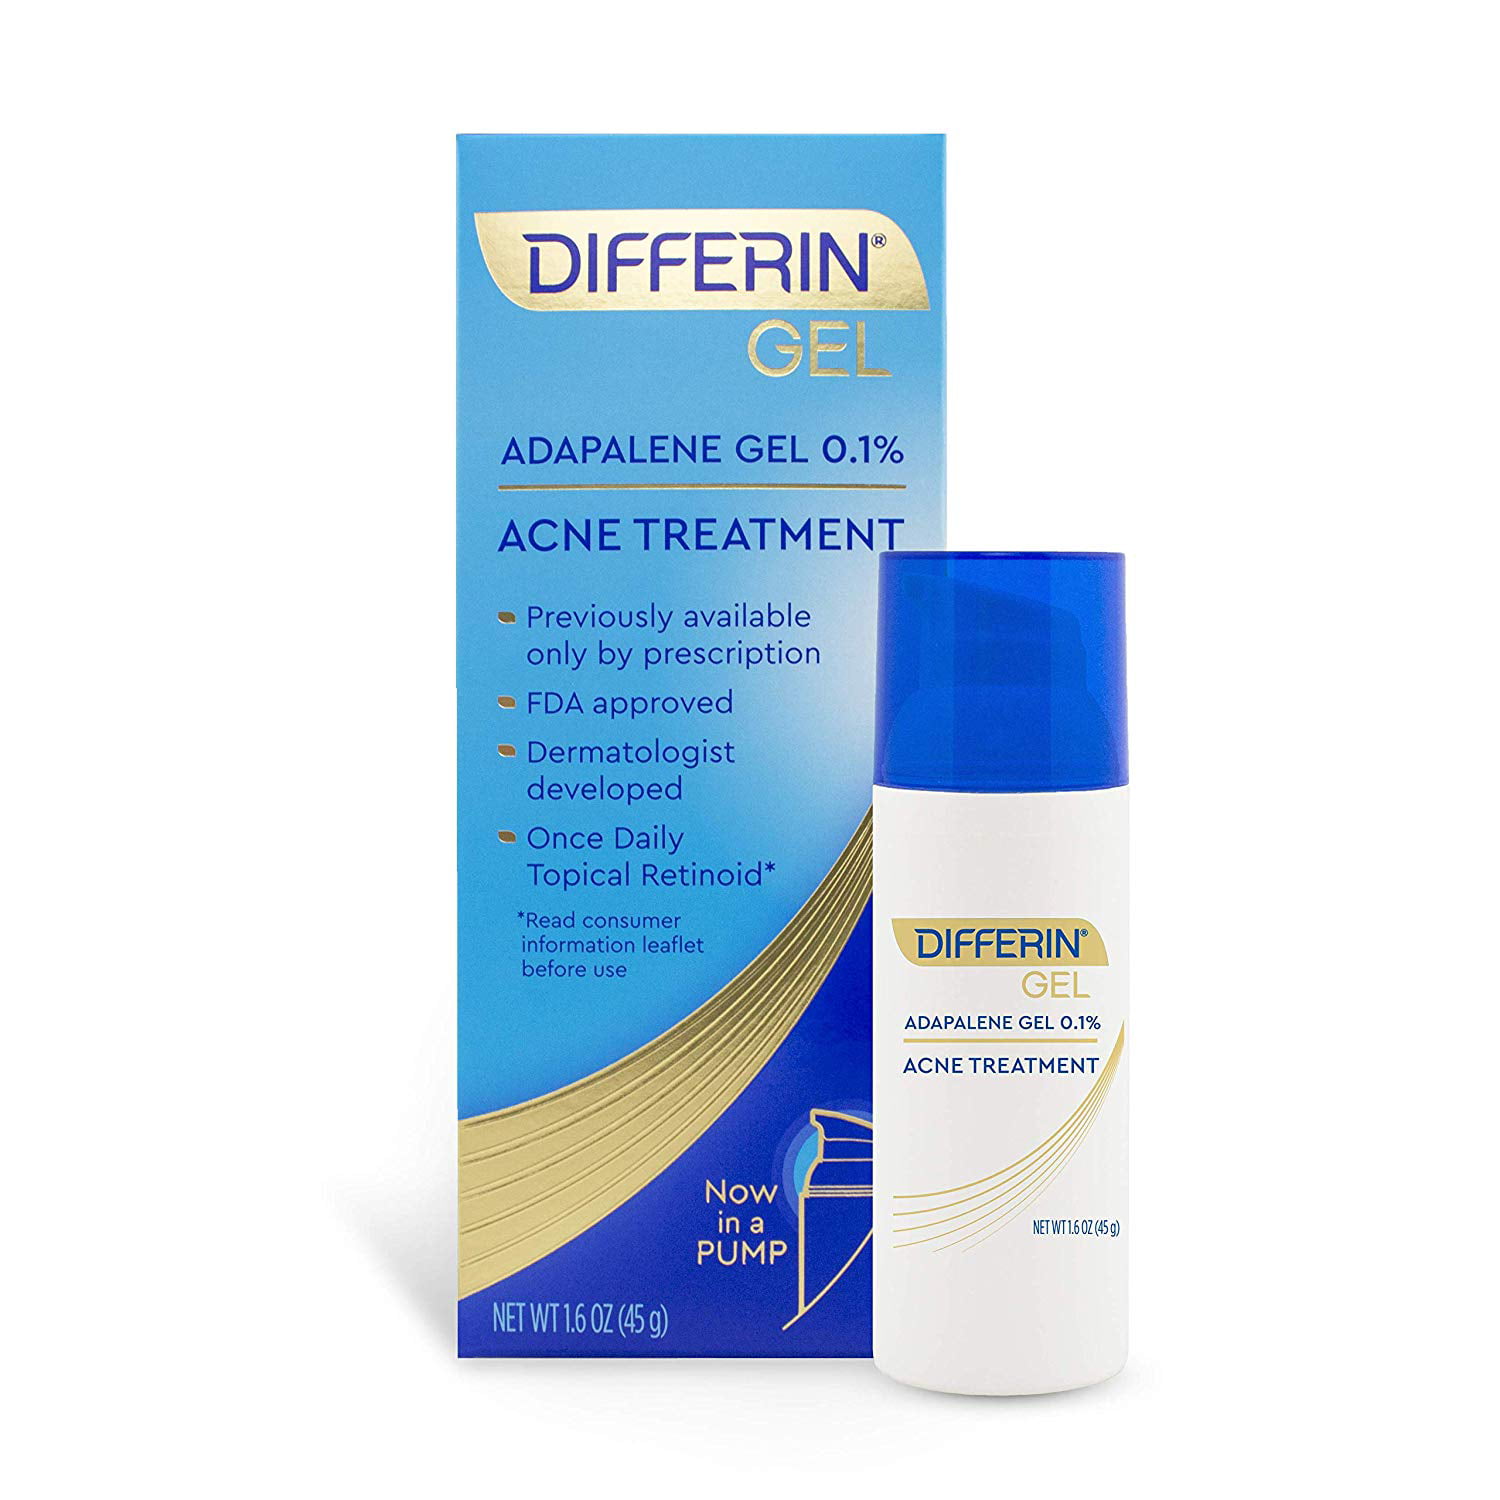 Differin Adapalene Gel 0.1% Acne treatment, 45g, 90-day Supply Pump